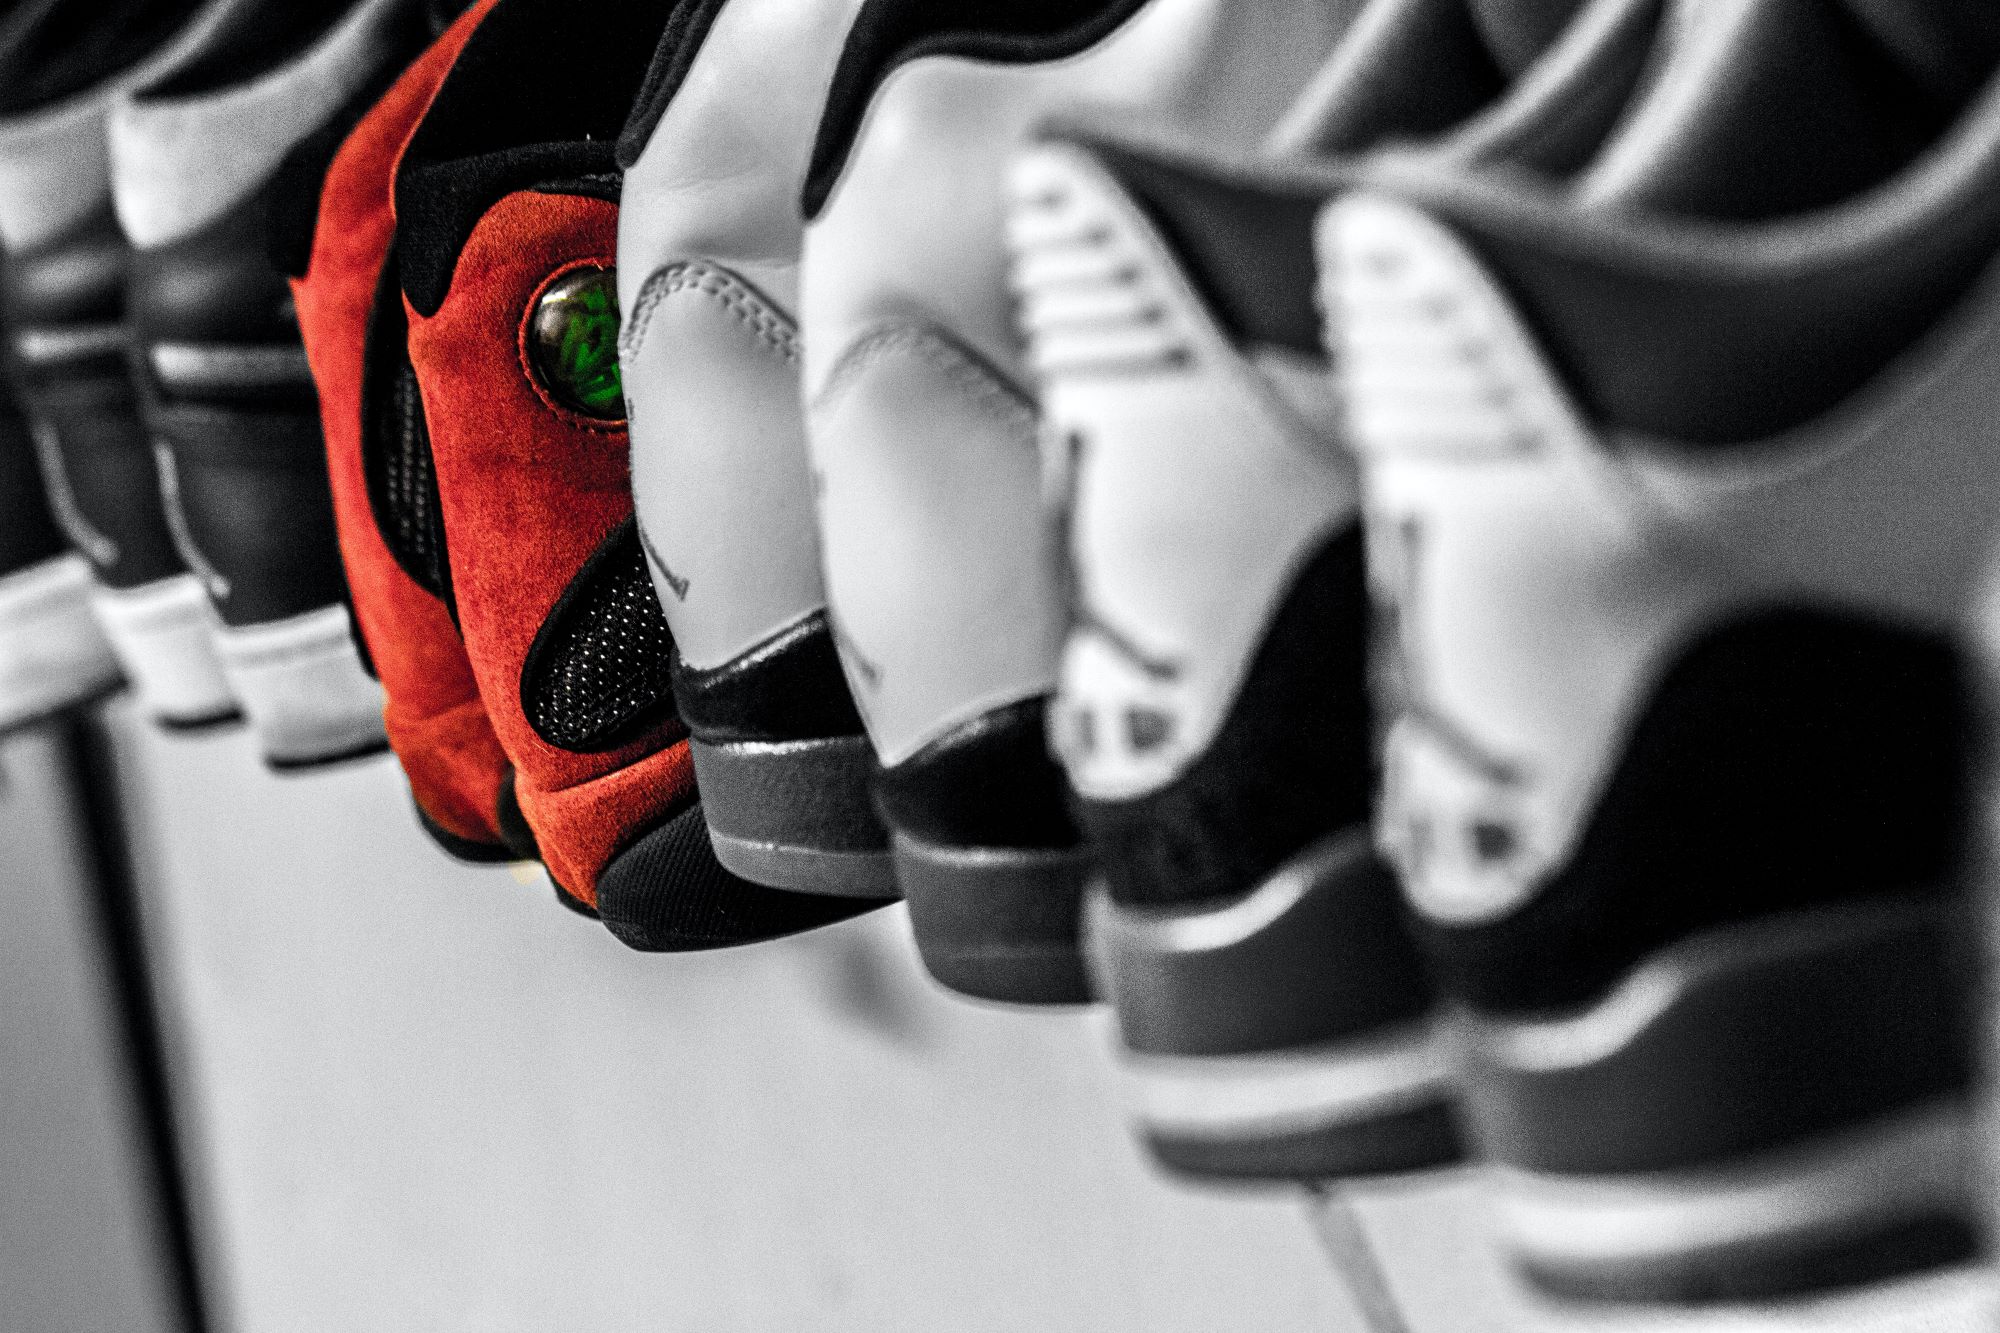 Sneaker Shopping Site StockX